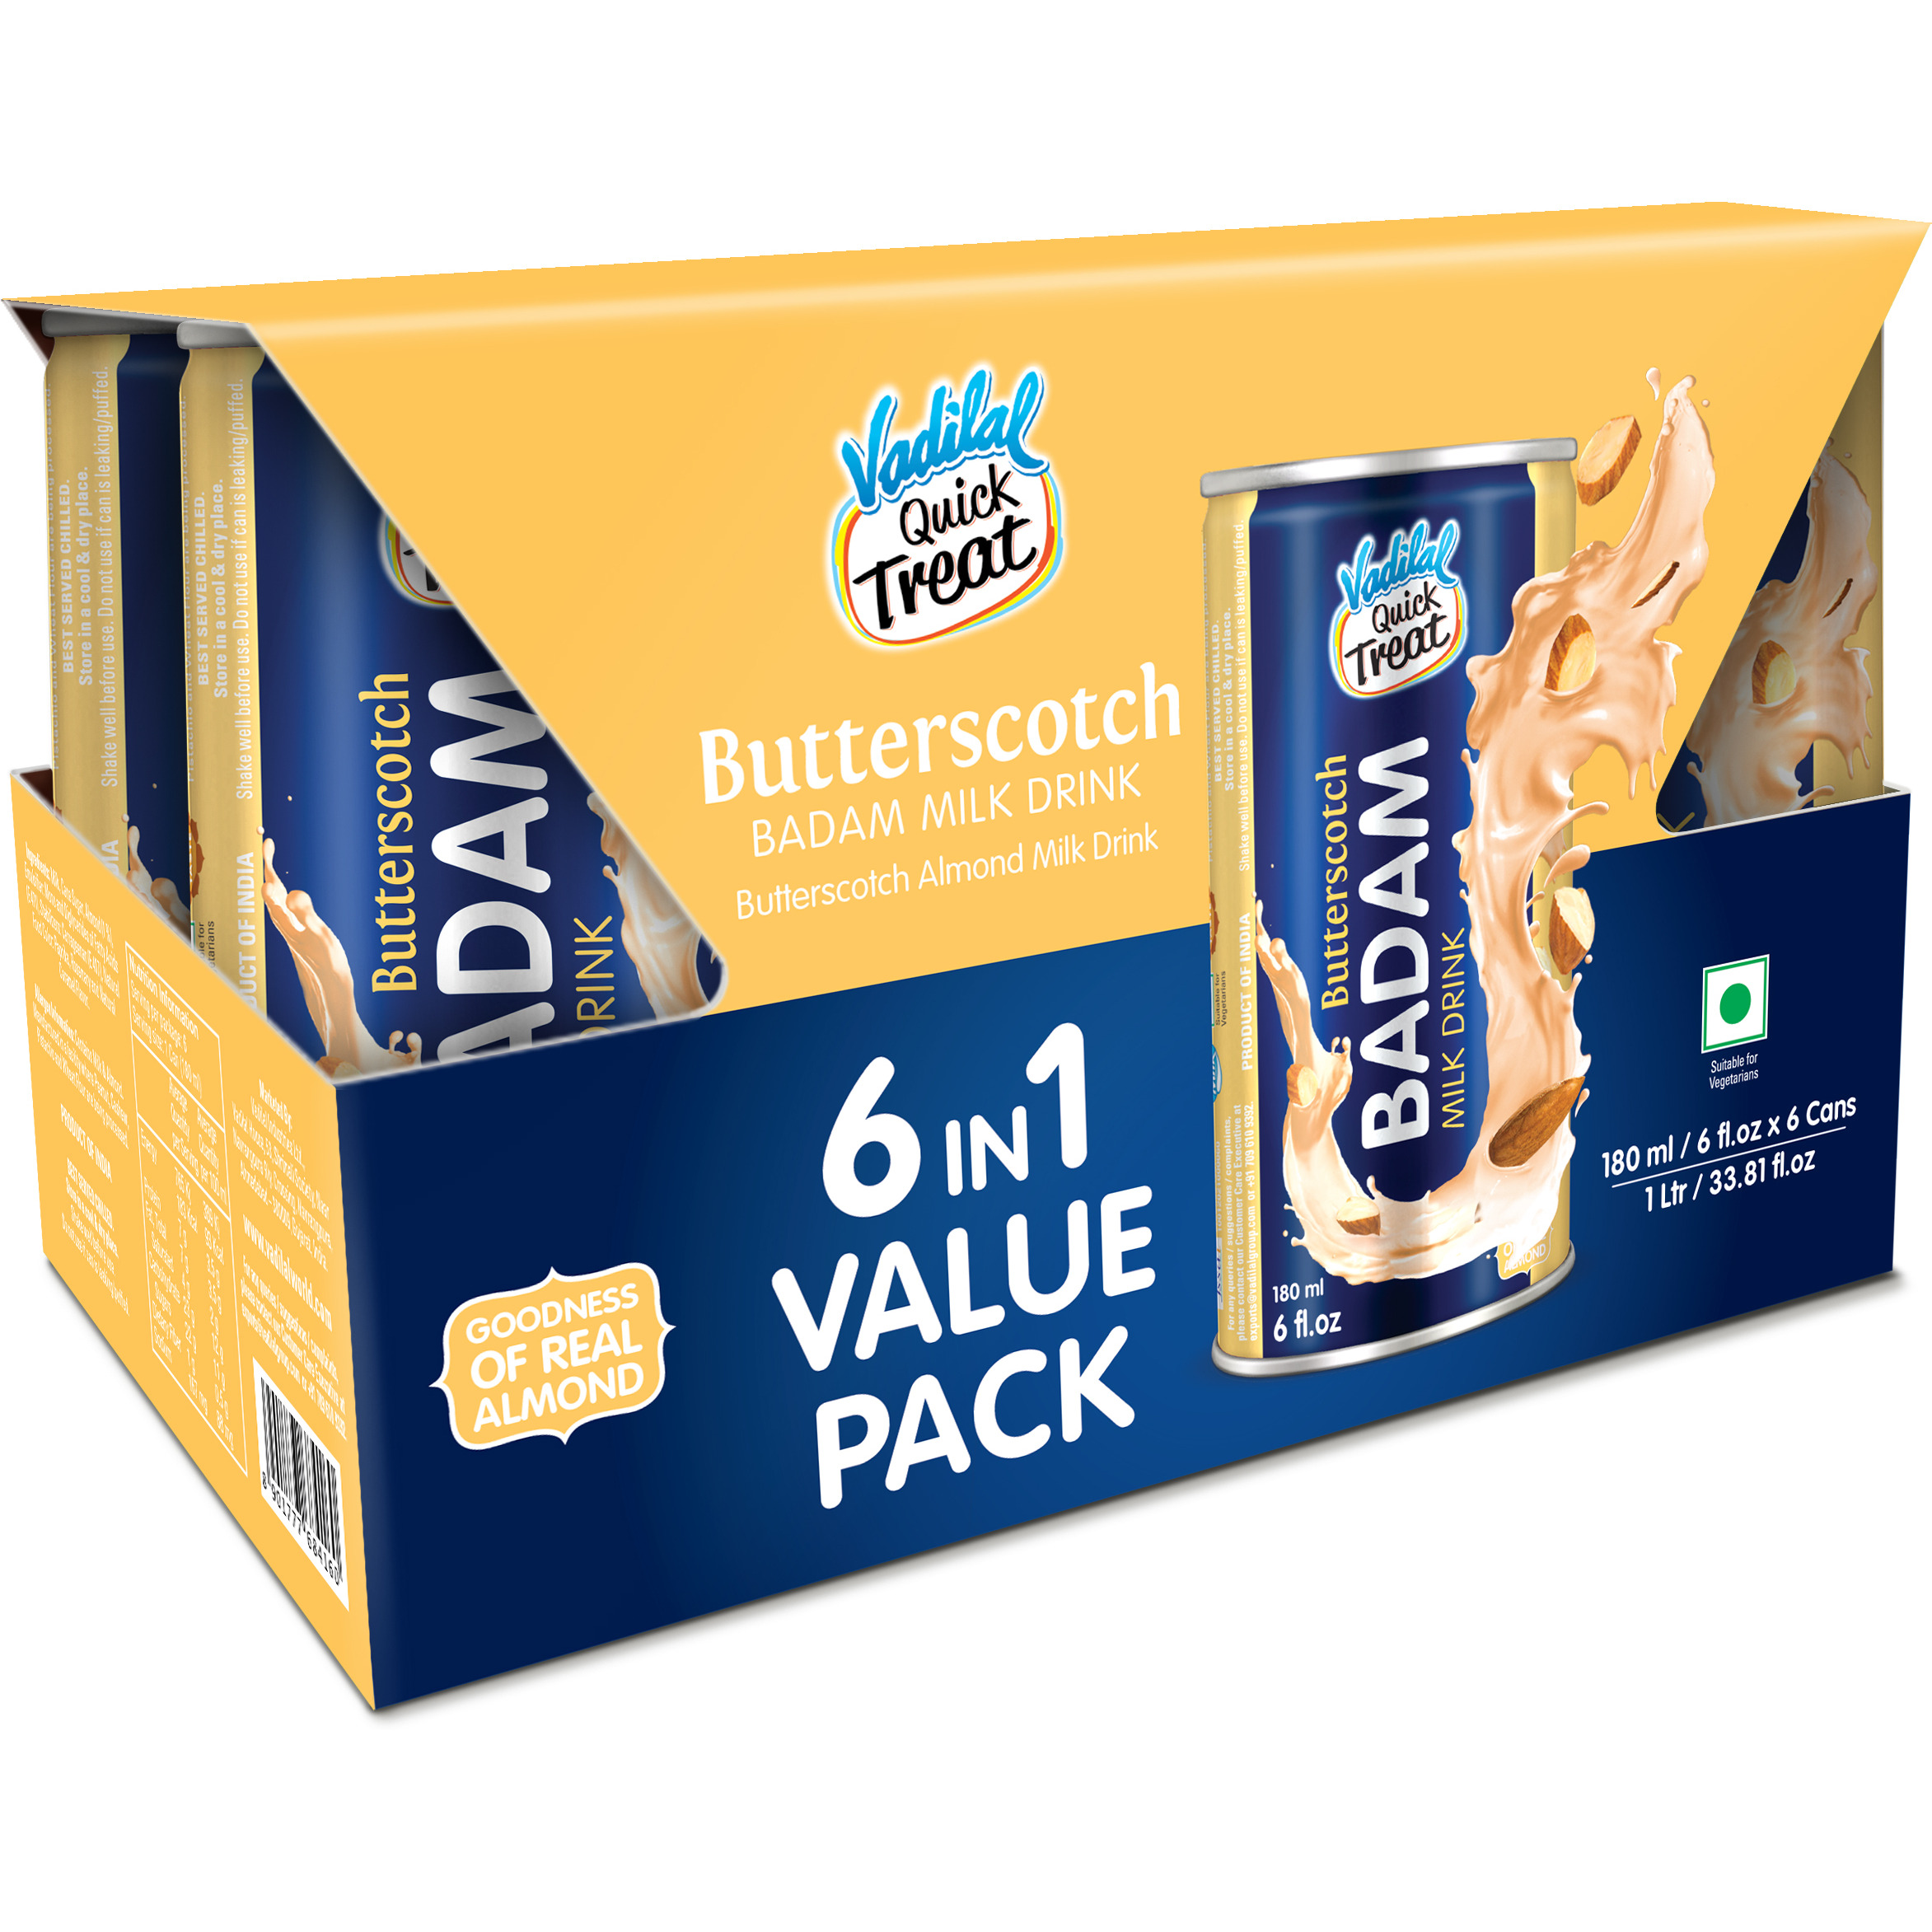 Case of 6 - Vadilal Butterscotch Badam Milk Drink 6 In 1 Value Pack - 180 Ml (6 Fl Oz) [Fs]